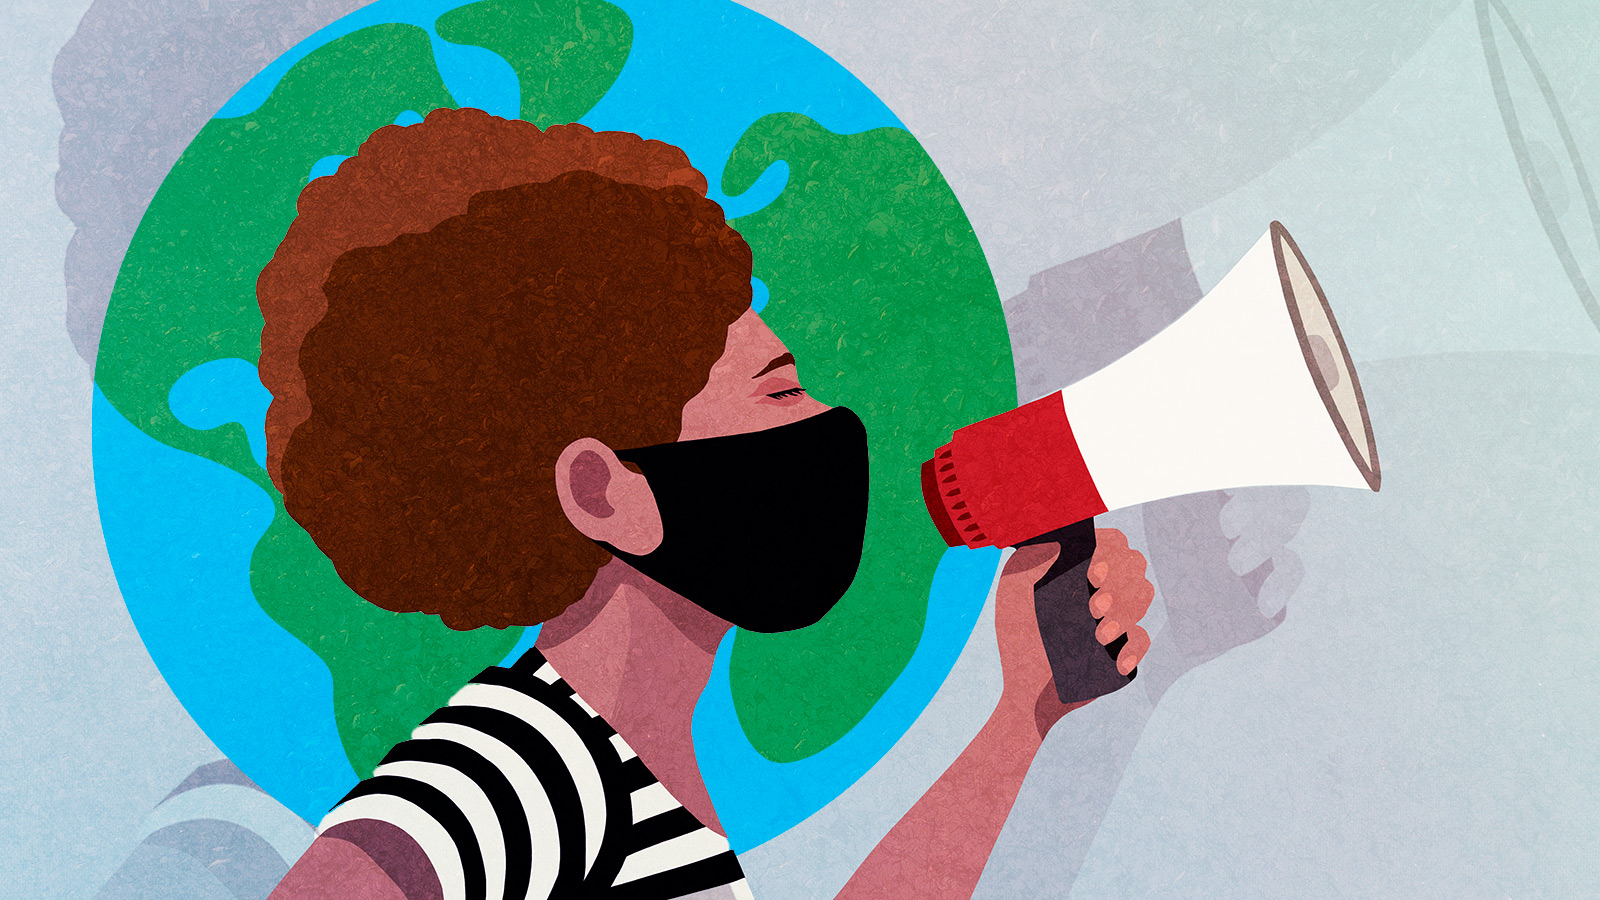 Illustrated female activist with megaphone